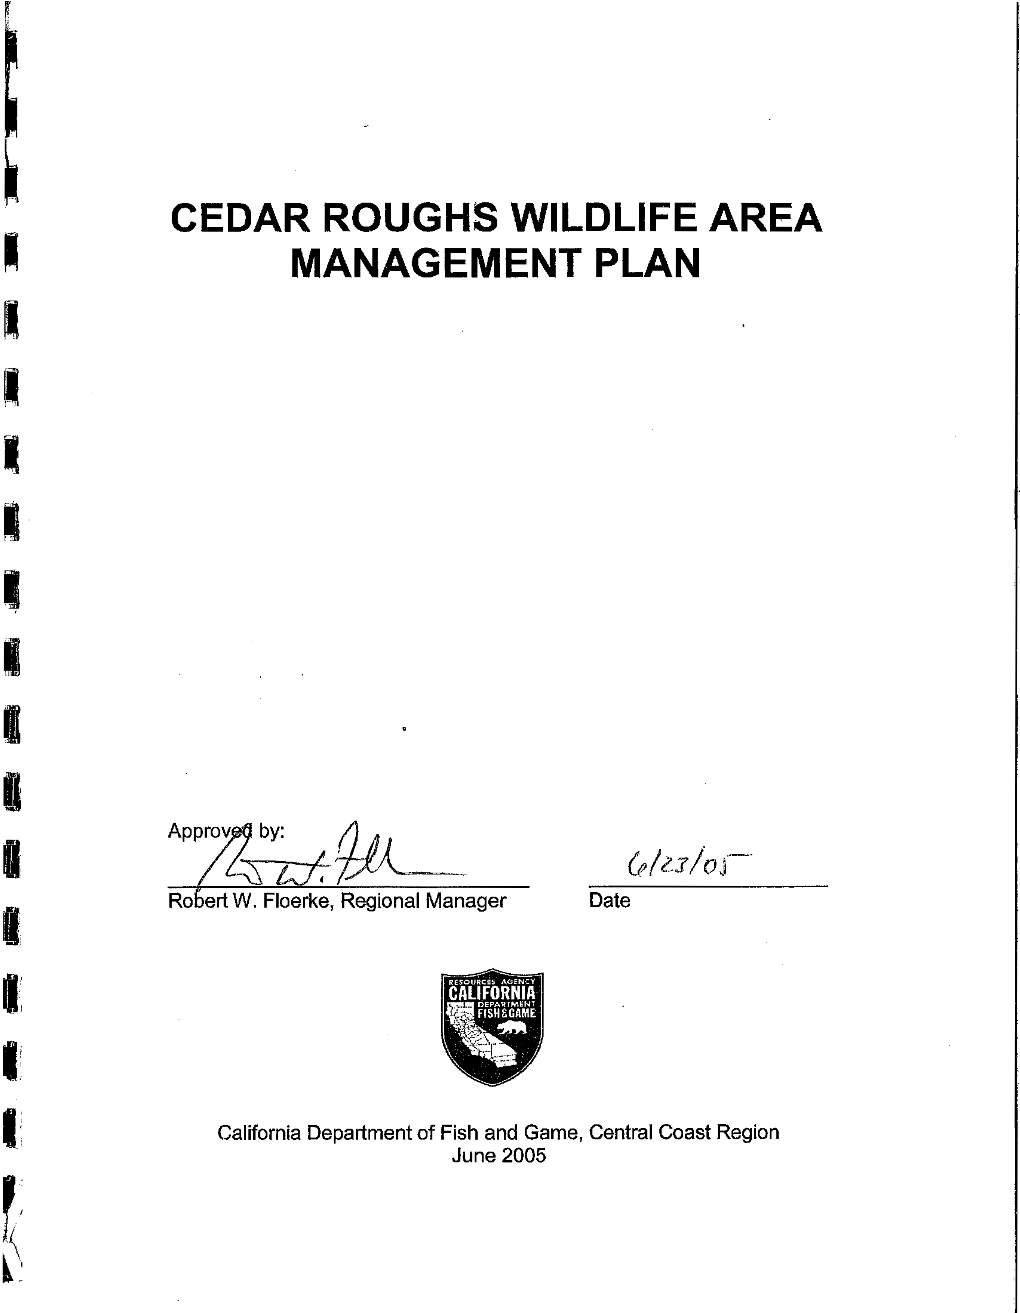 Cedar Roughs Wildlife Area Land Management Plan